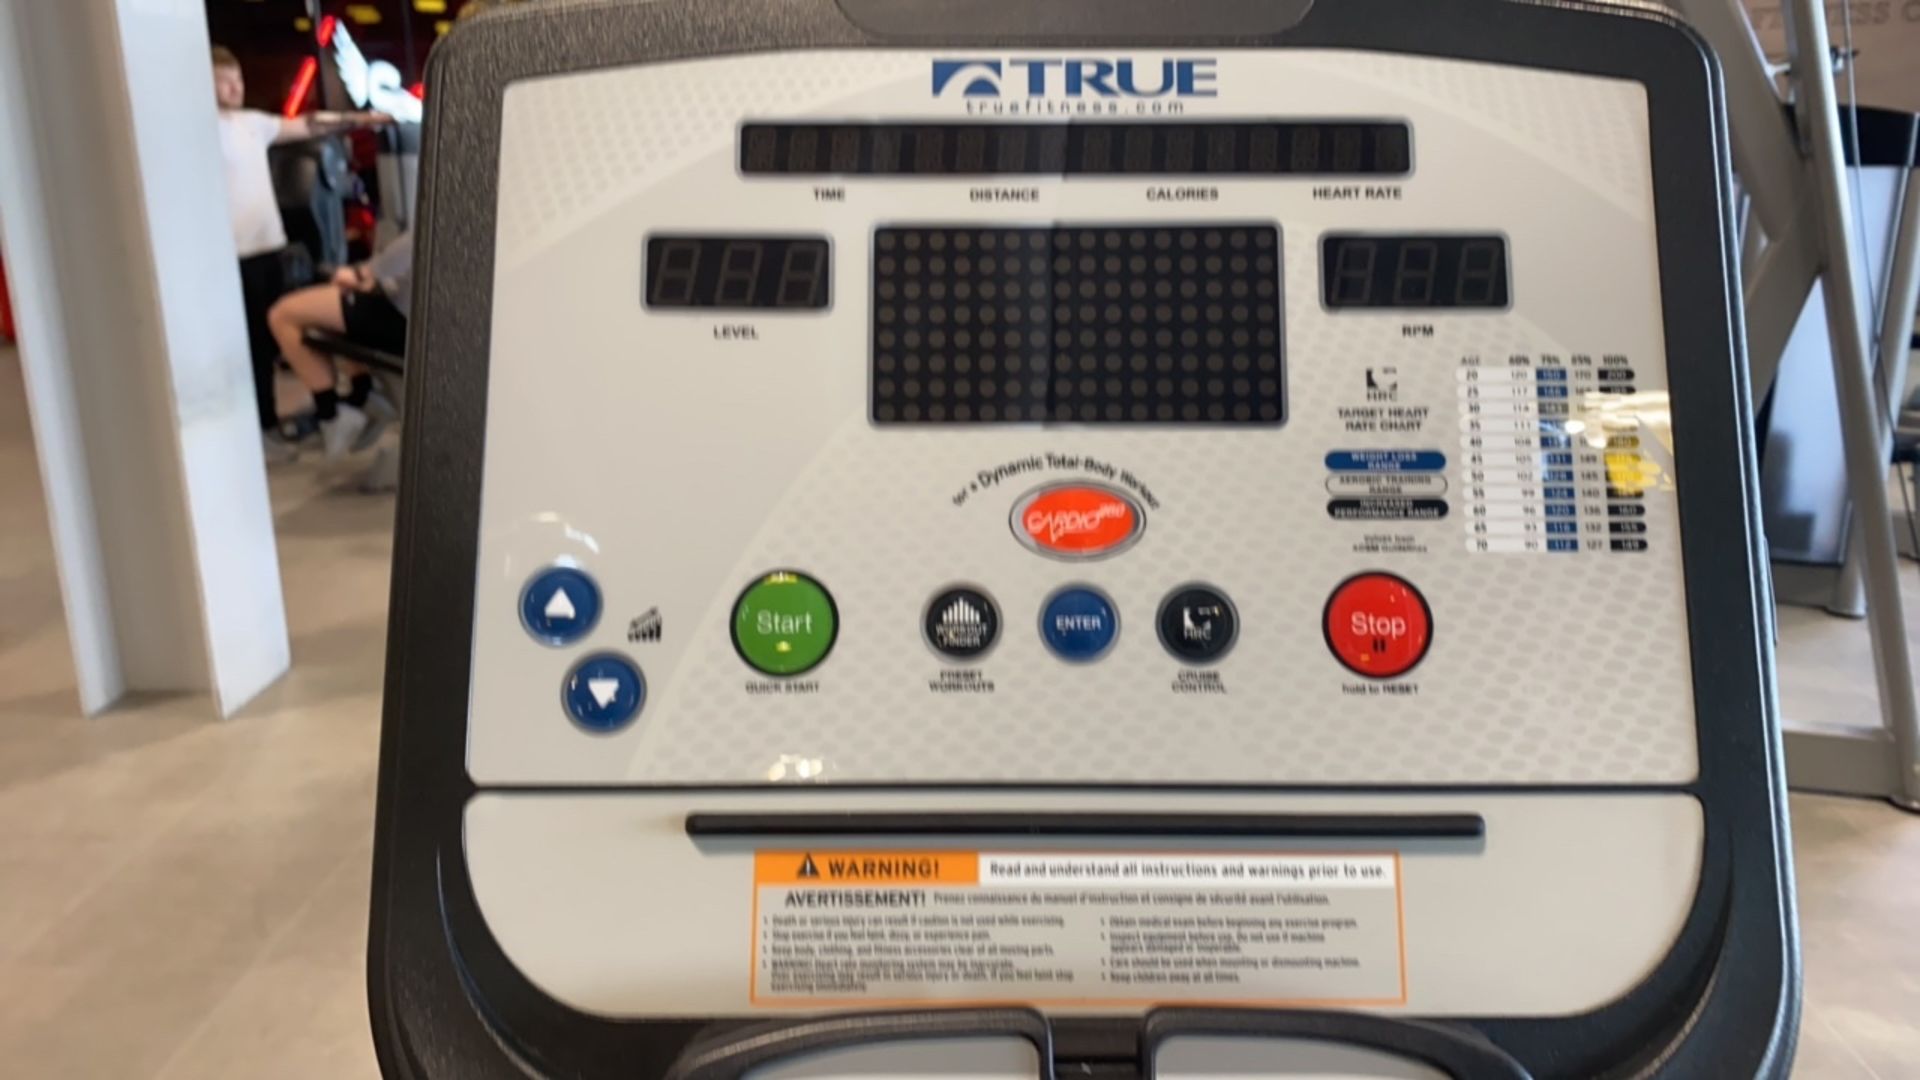 True Fitness Cross Trainer - Image 4 of 4